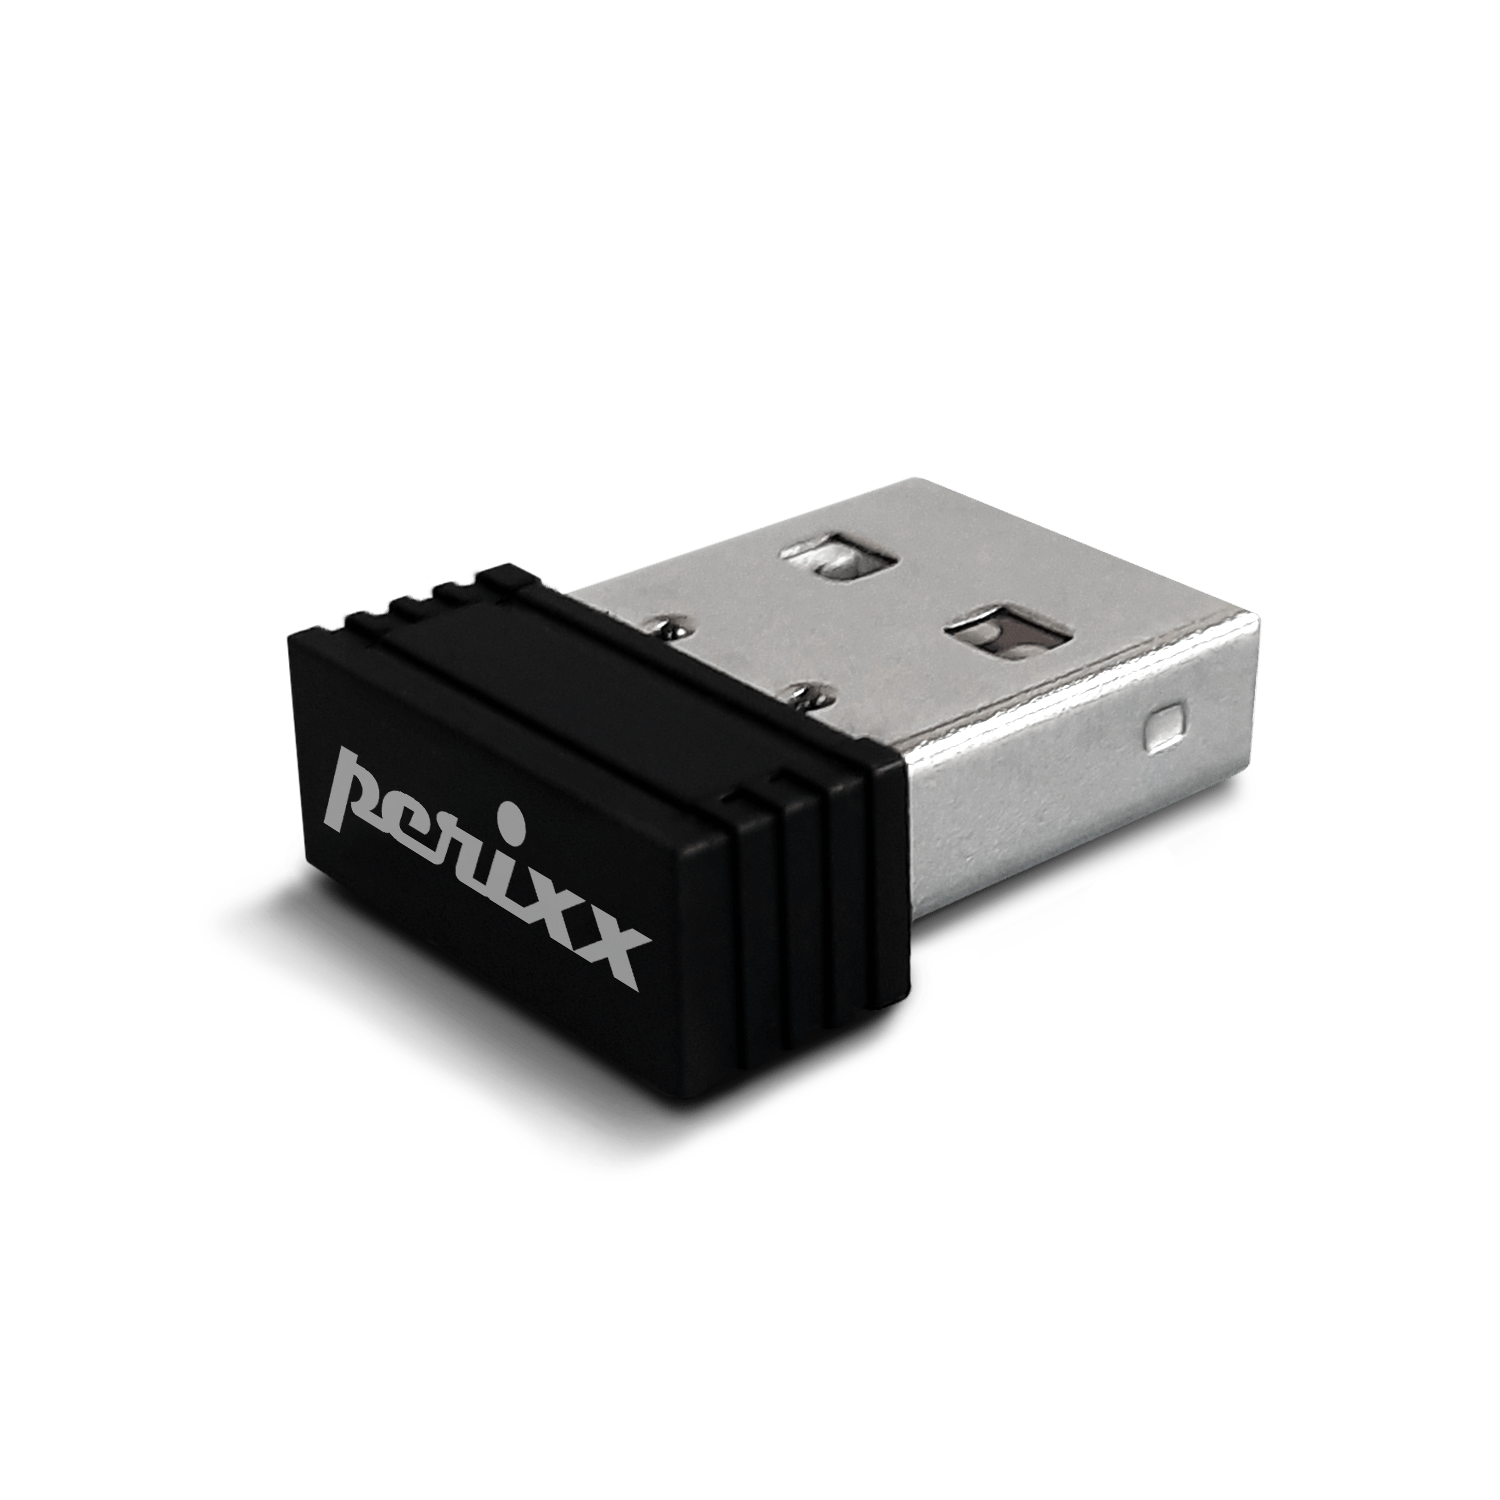 USB dongle receiver for PERIBOARD-716III - Perixx Europe